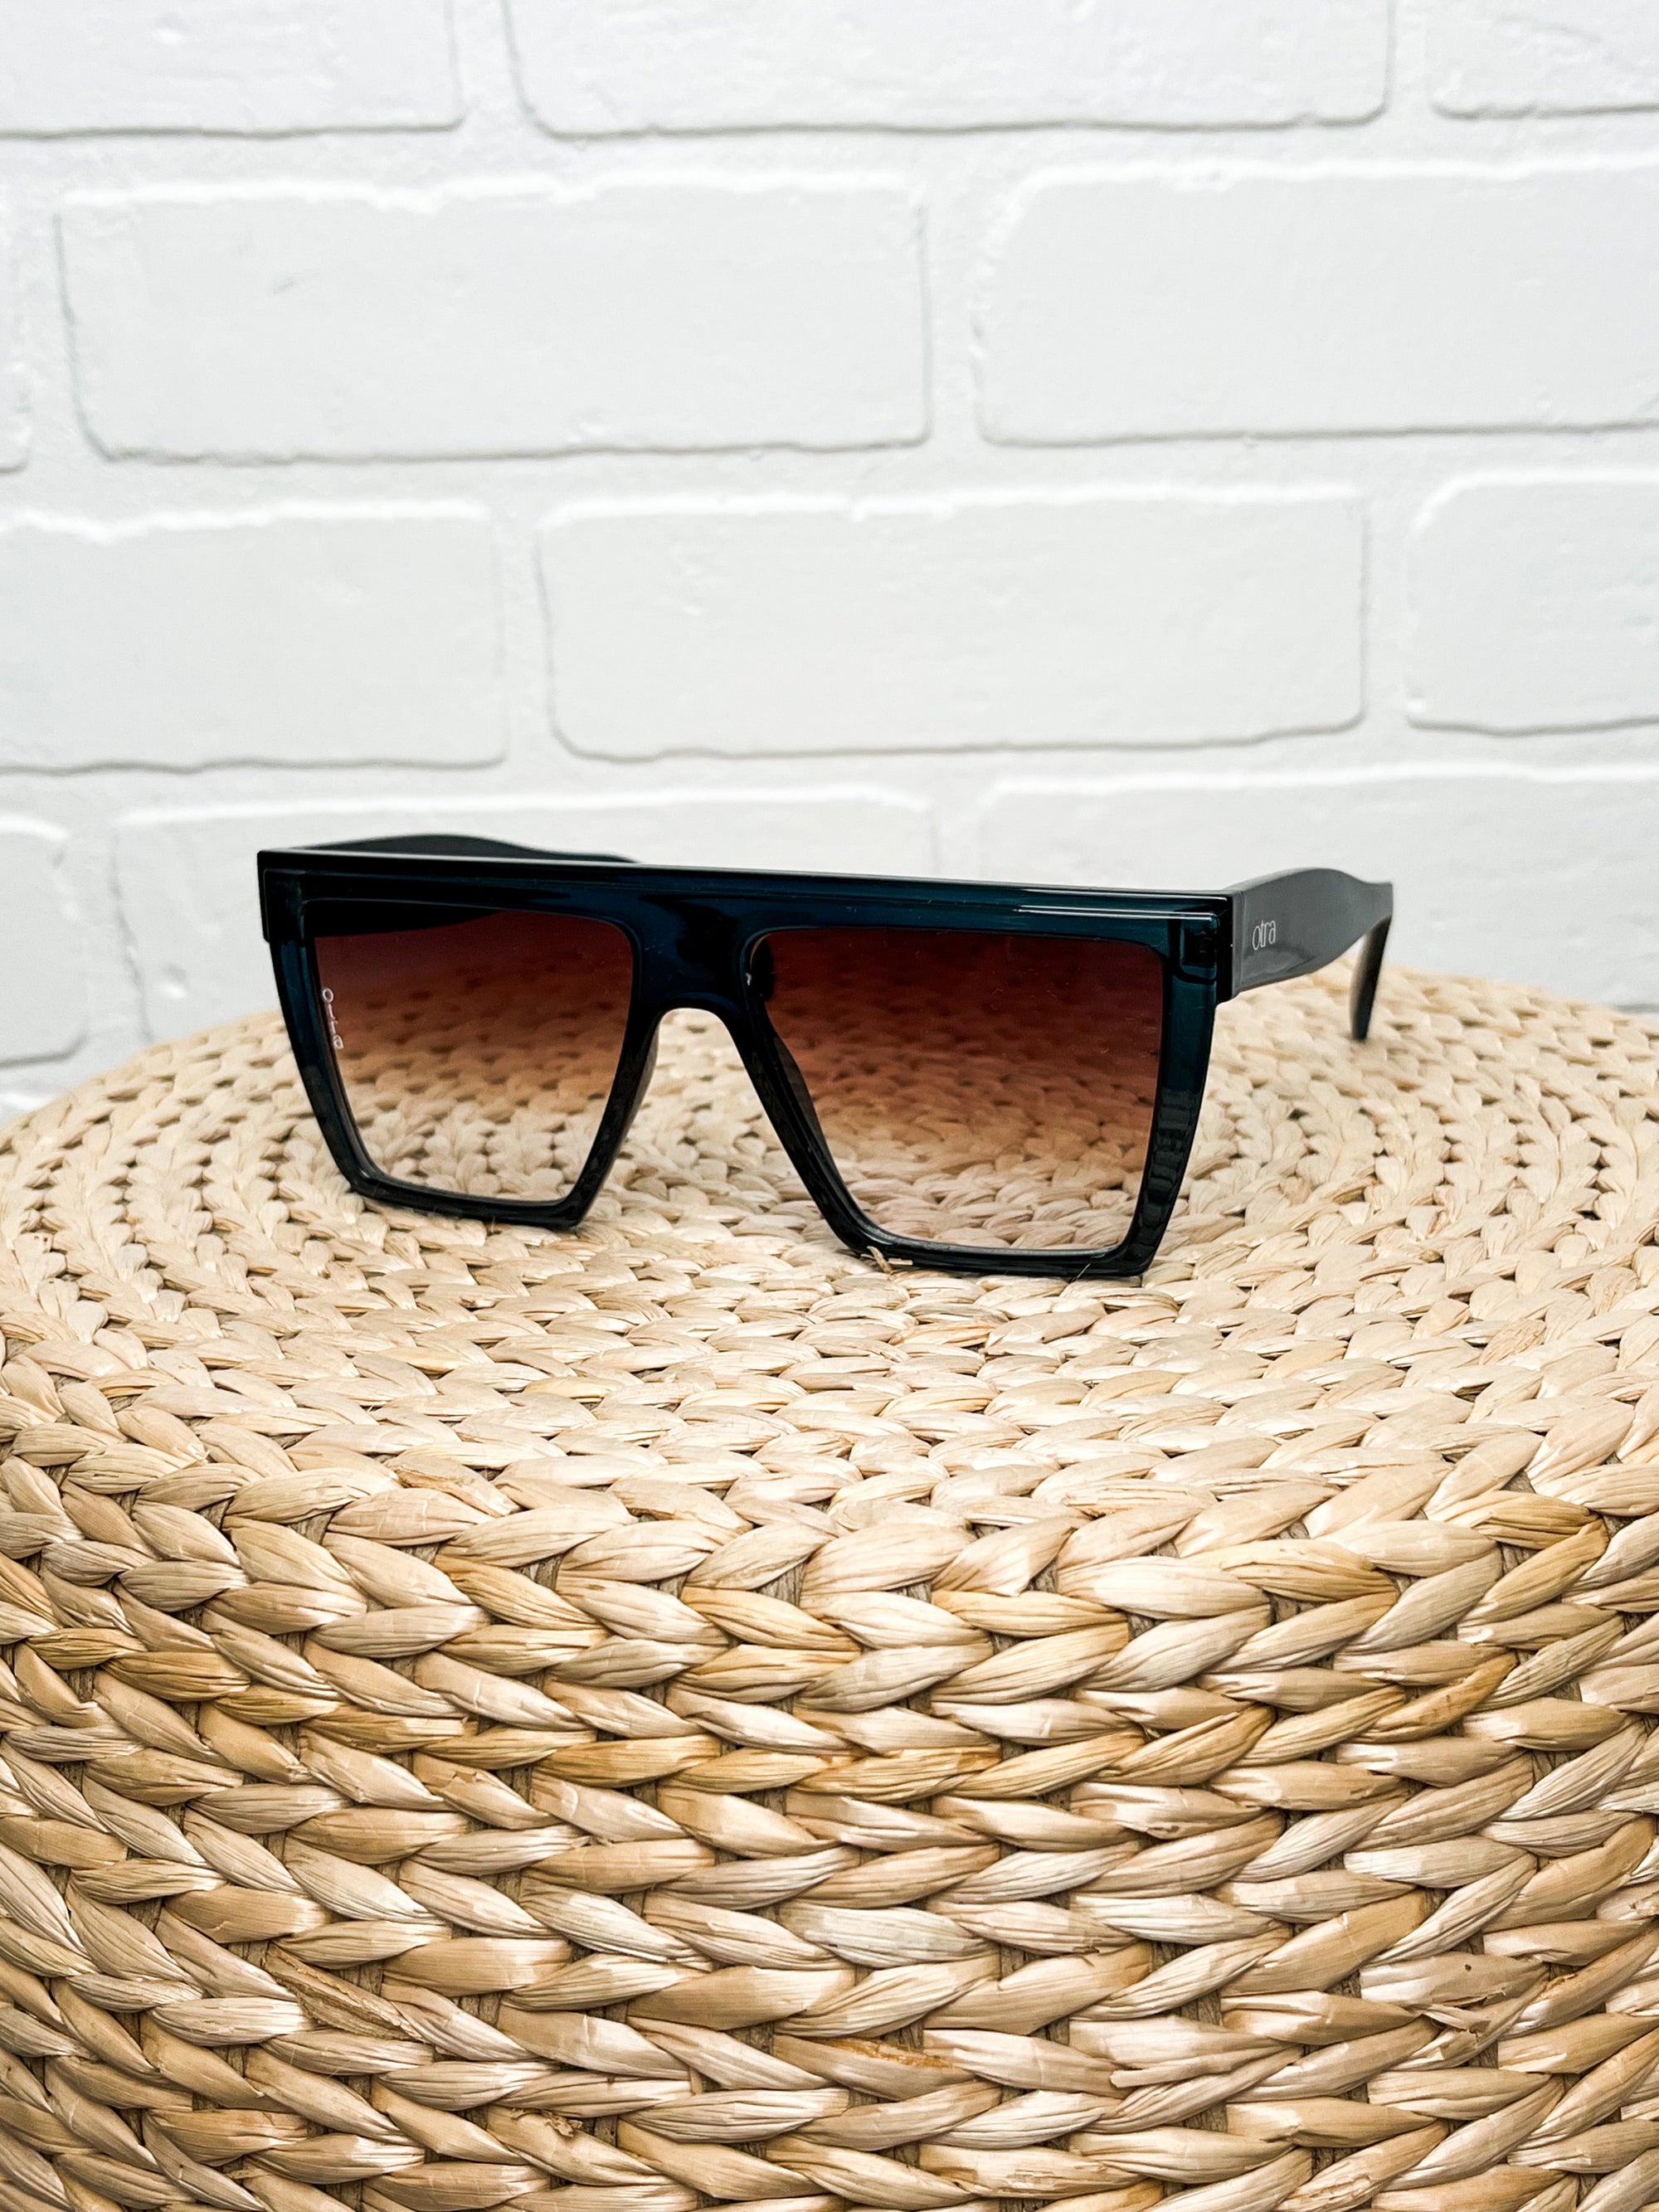 Otra Ollie sunglasses navy/brown - Stylish Sunglasses - Cute Sunglasses at Lush Fashion Lounge Boutique in Oklahoma